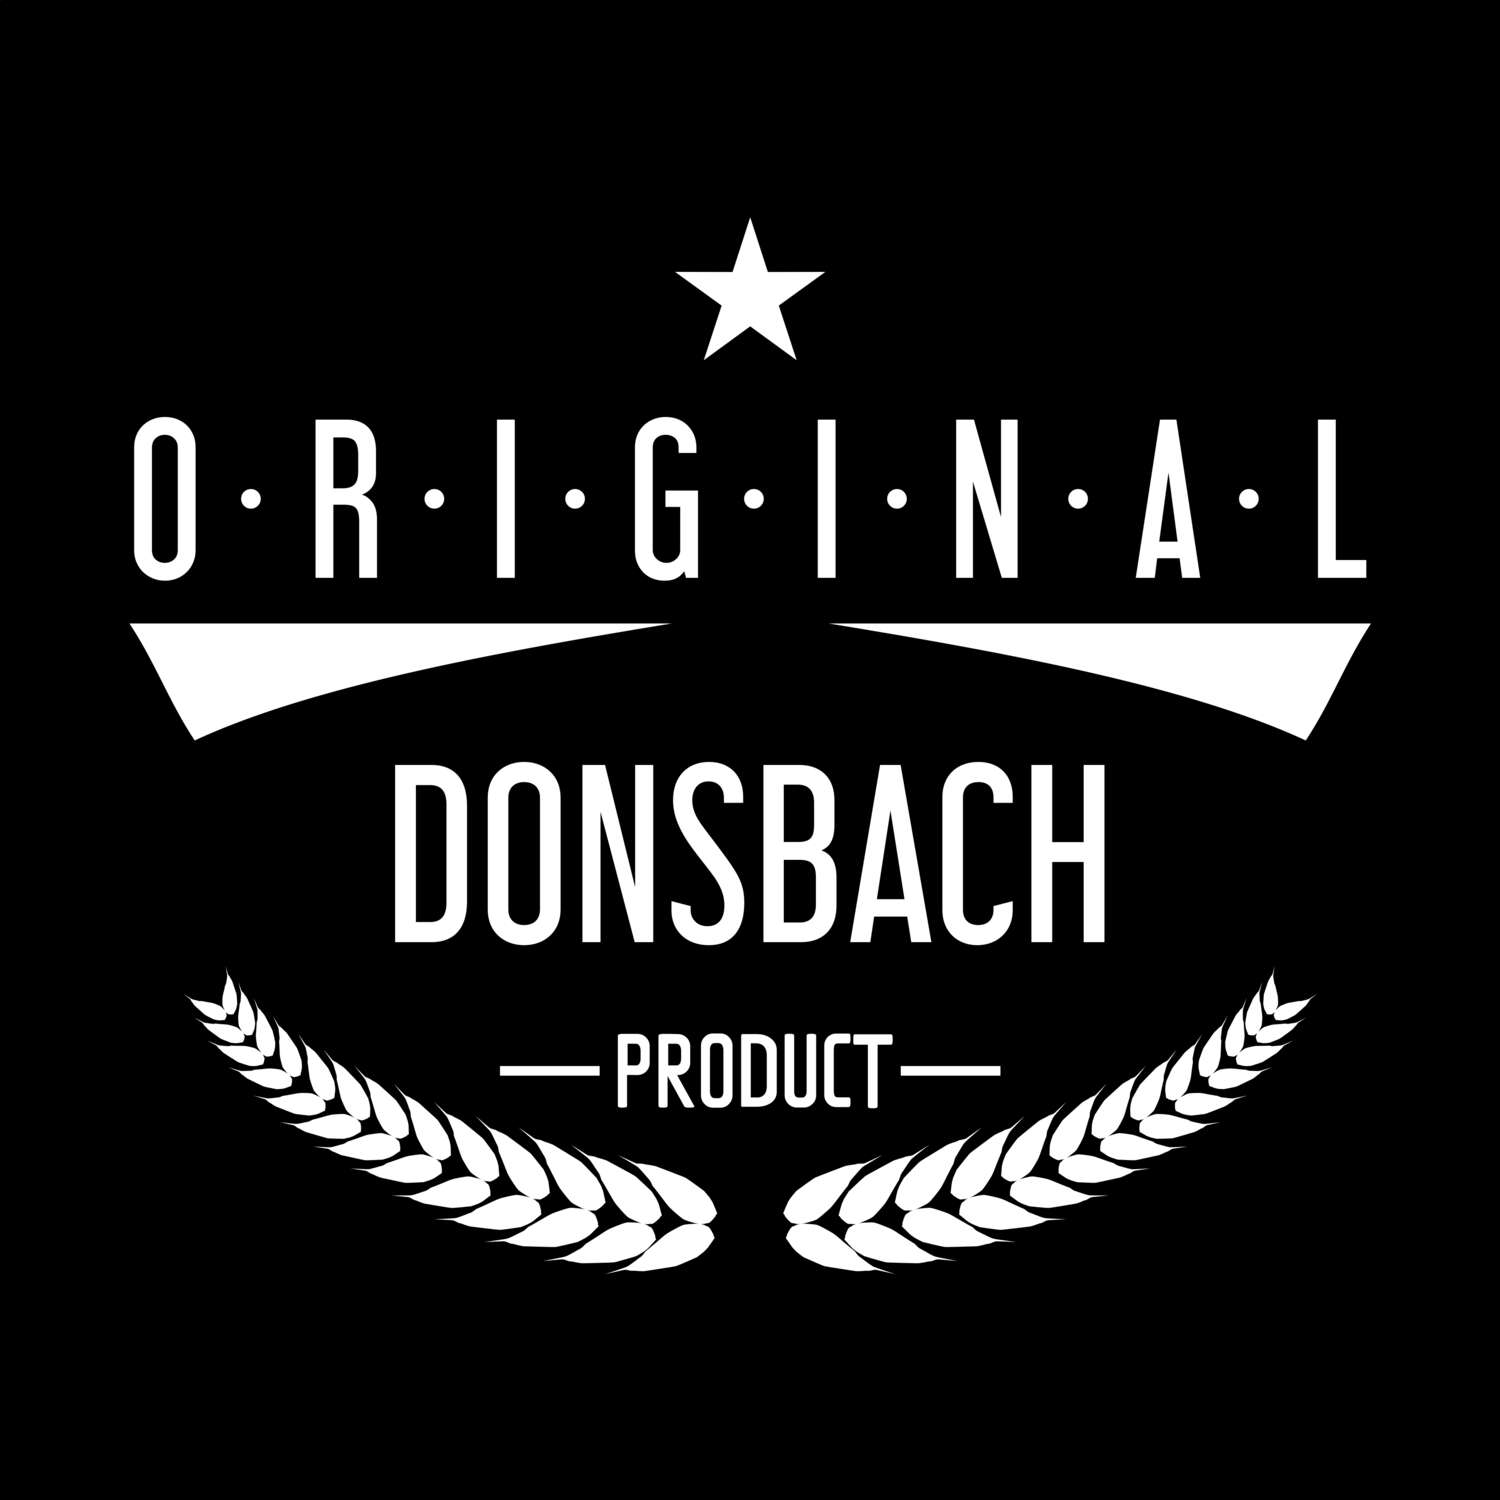 Donsbach T-Shirt »Original Product«